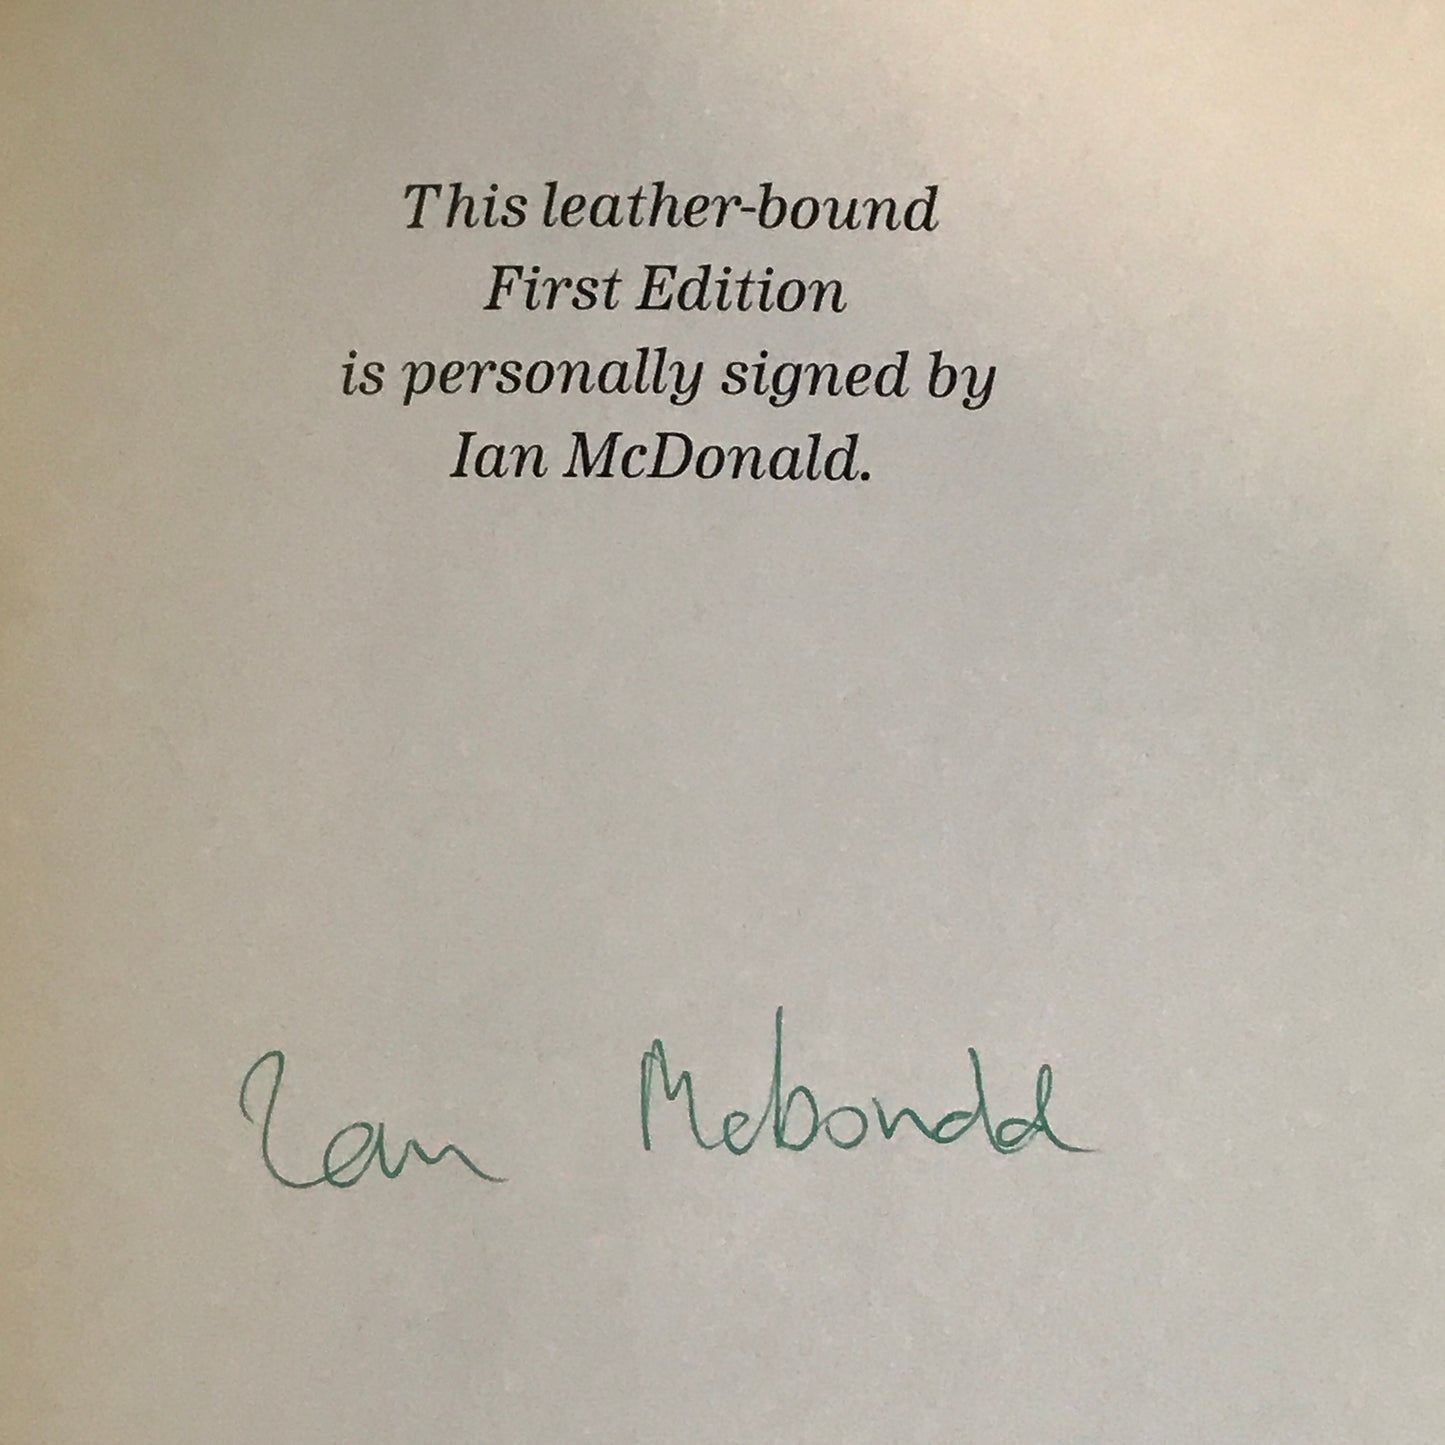 Terminal Café - Ian McDonald - Signed - 1st Edition - Easton Press - 1994